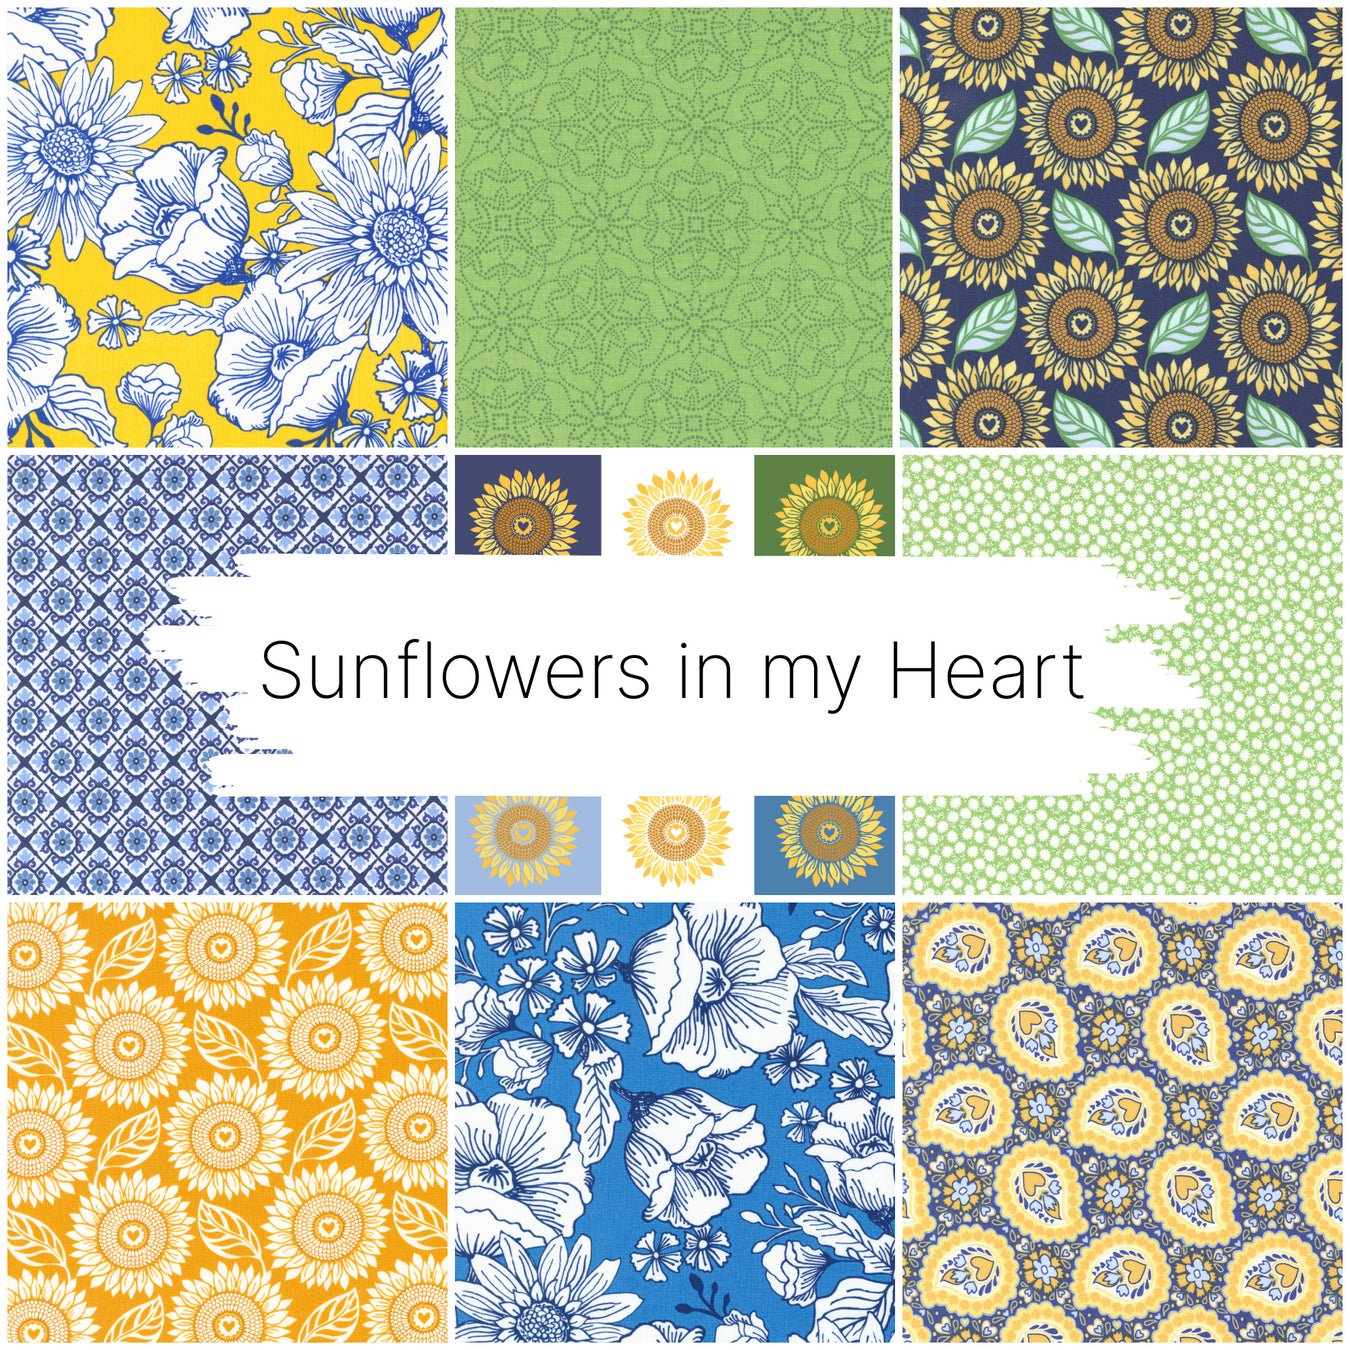 Sunflowers in my Heart